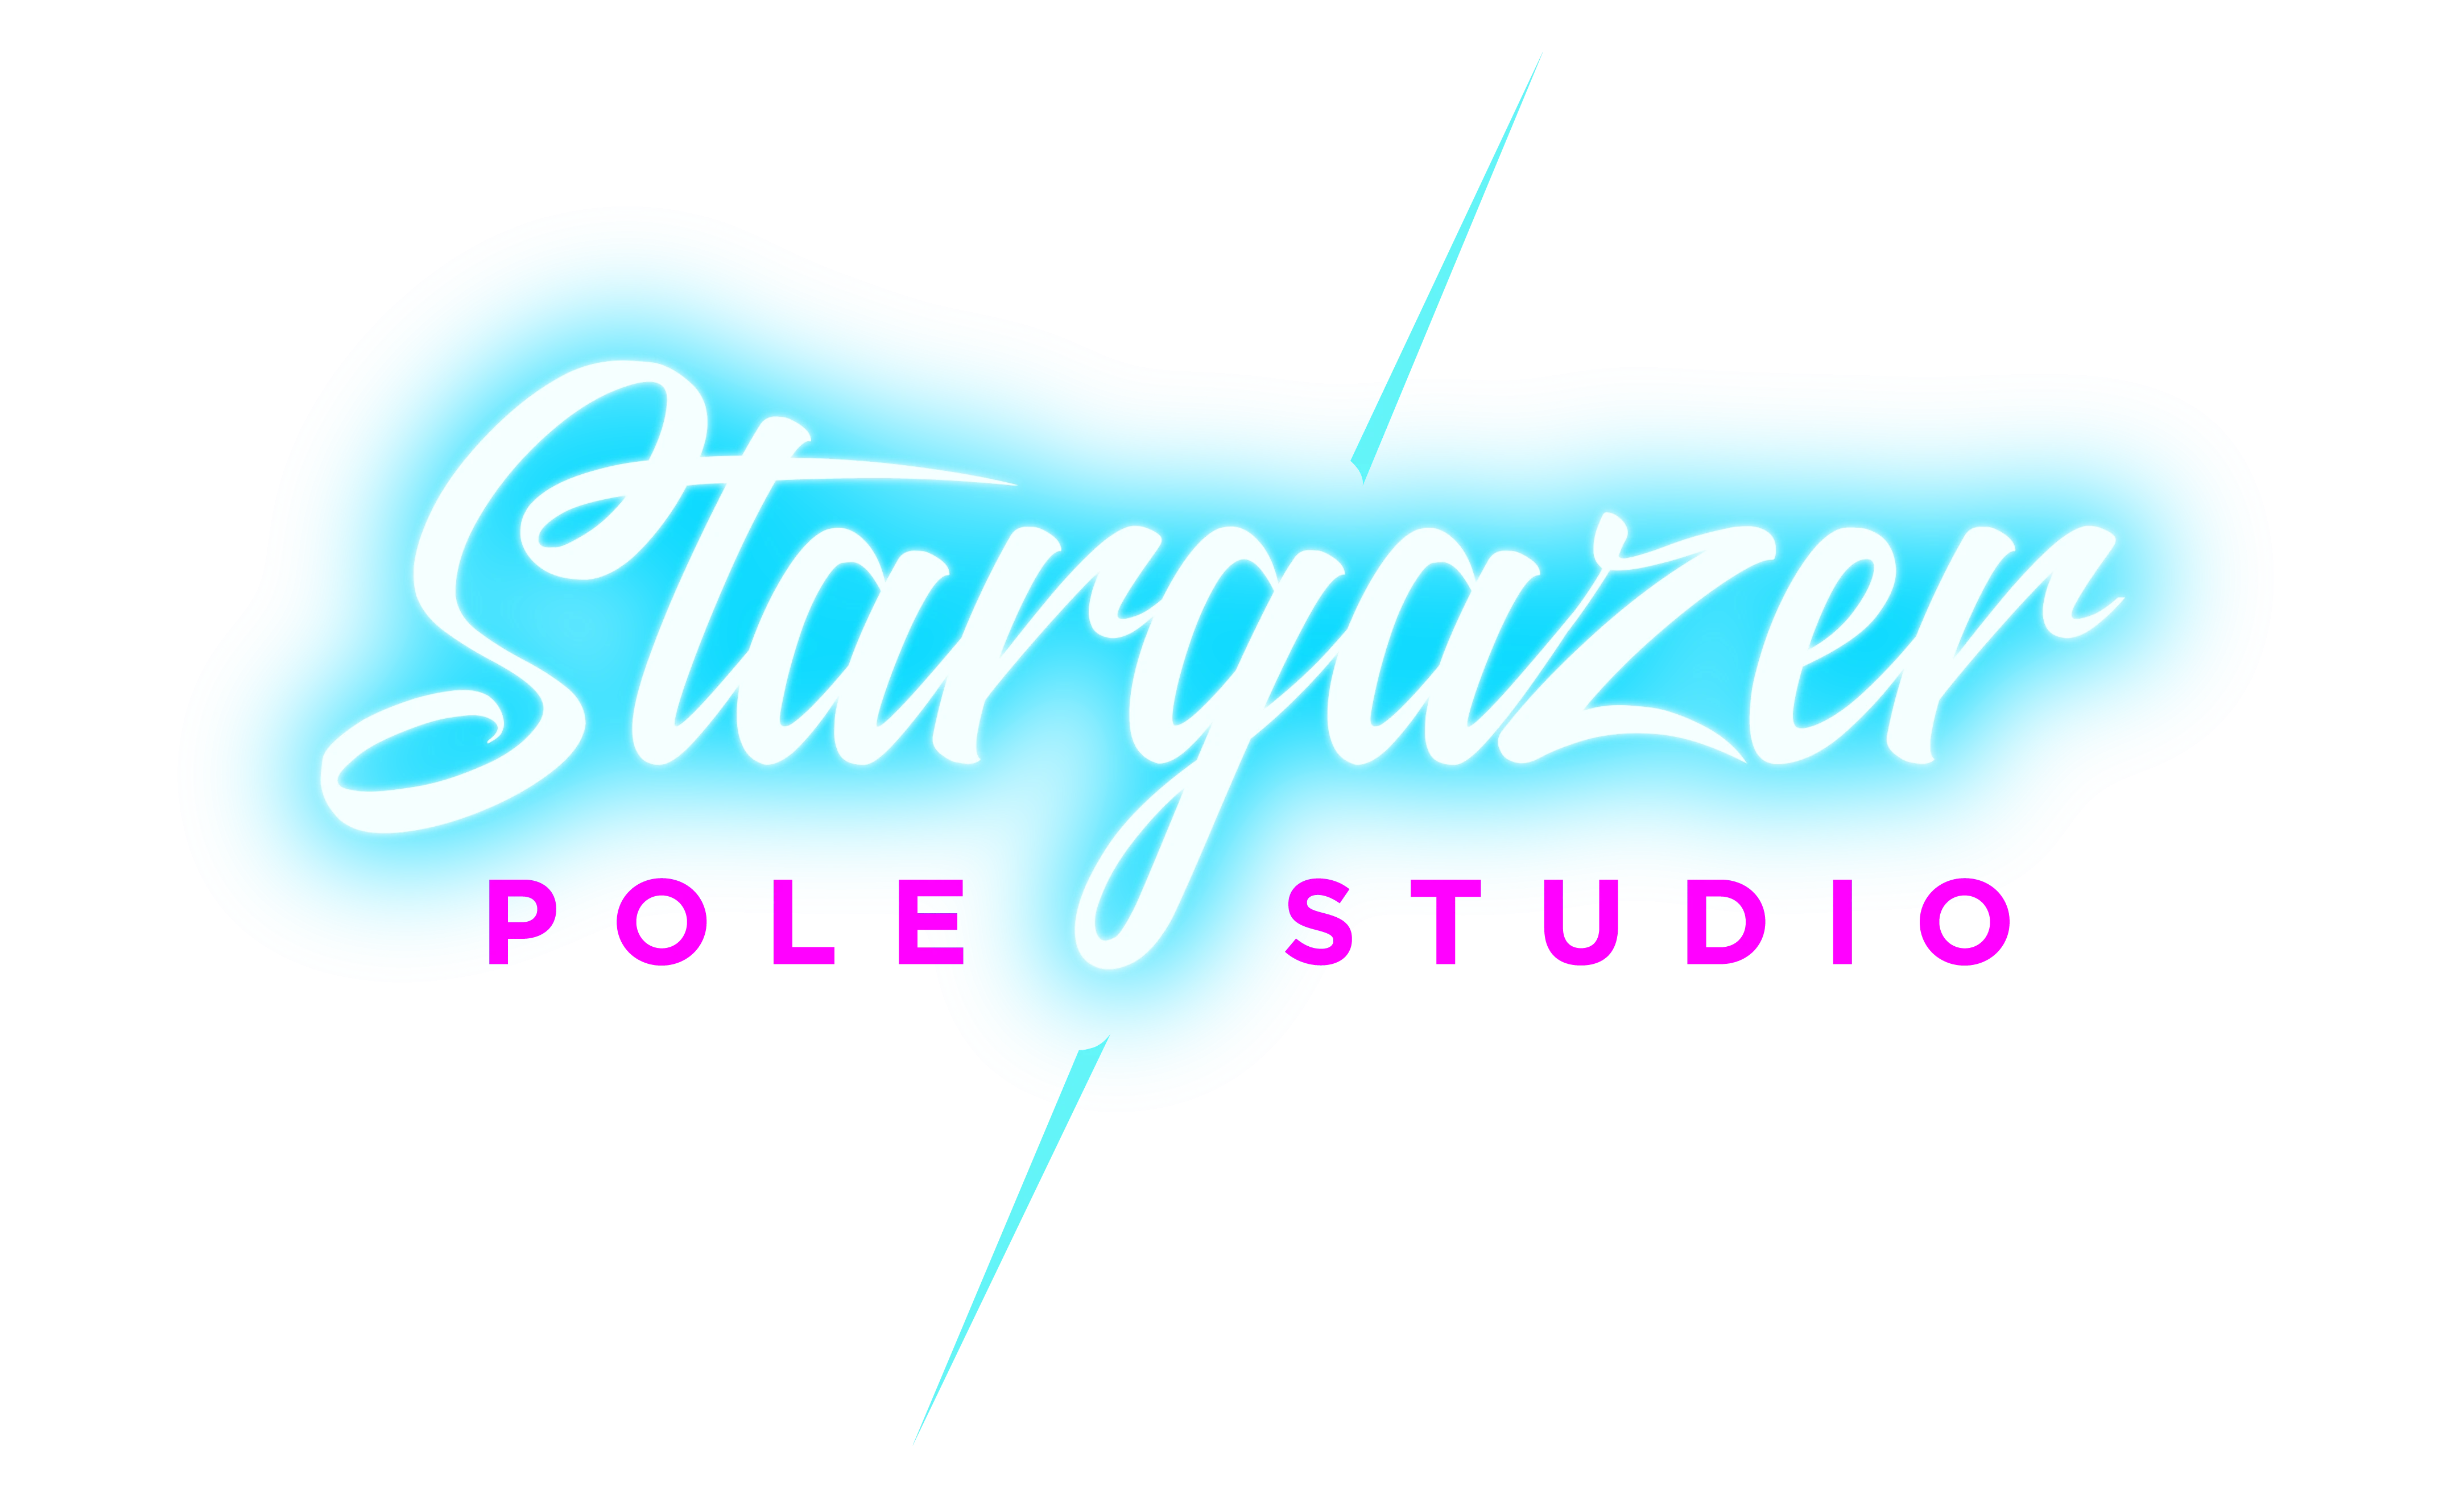 Stargazer Pole Studio